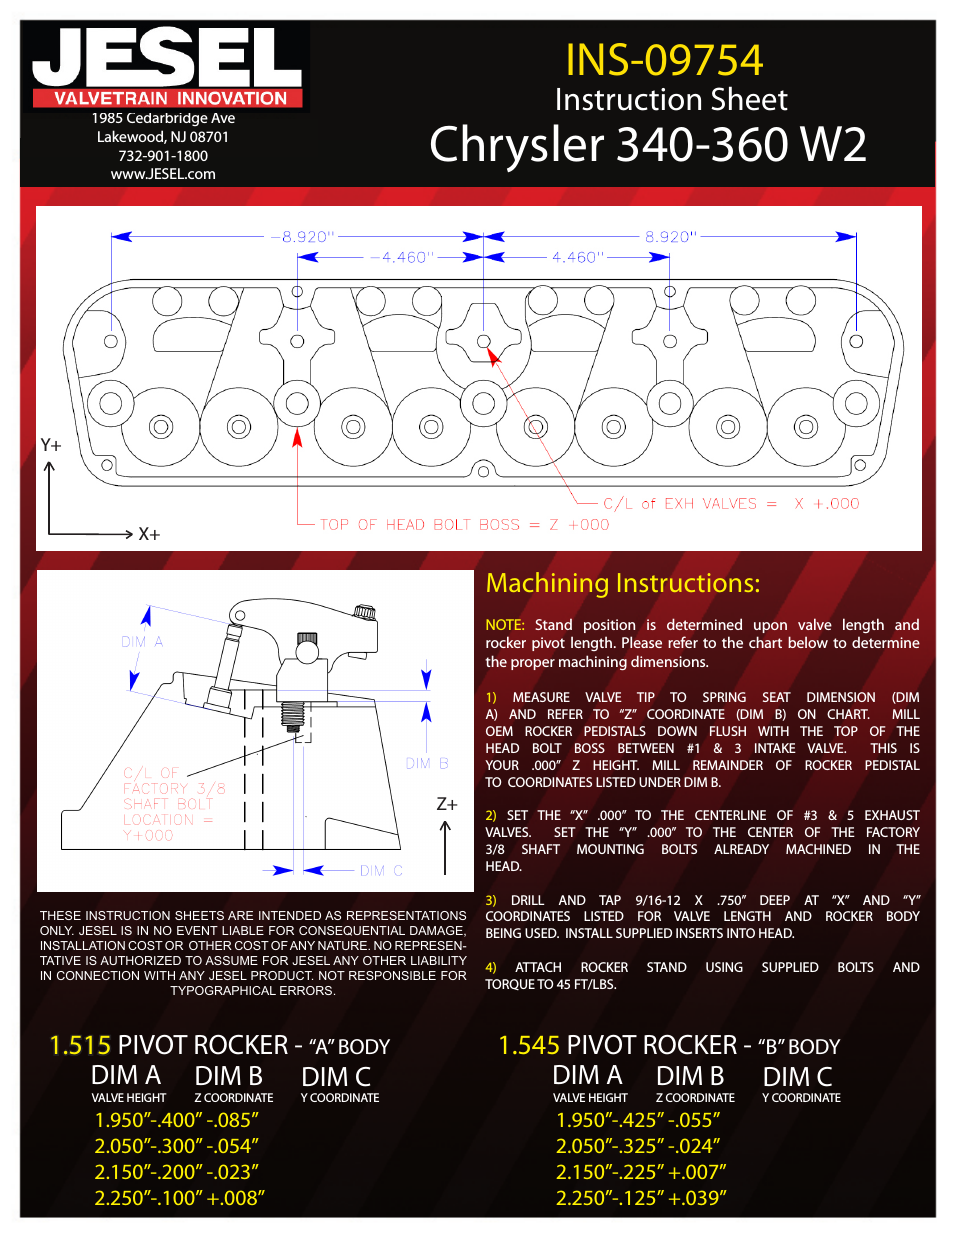 INS-09754 Chrysler 340-360 W2